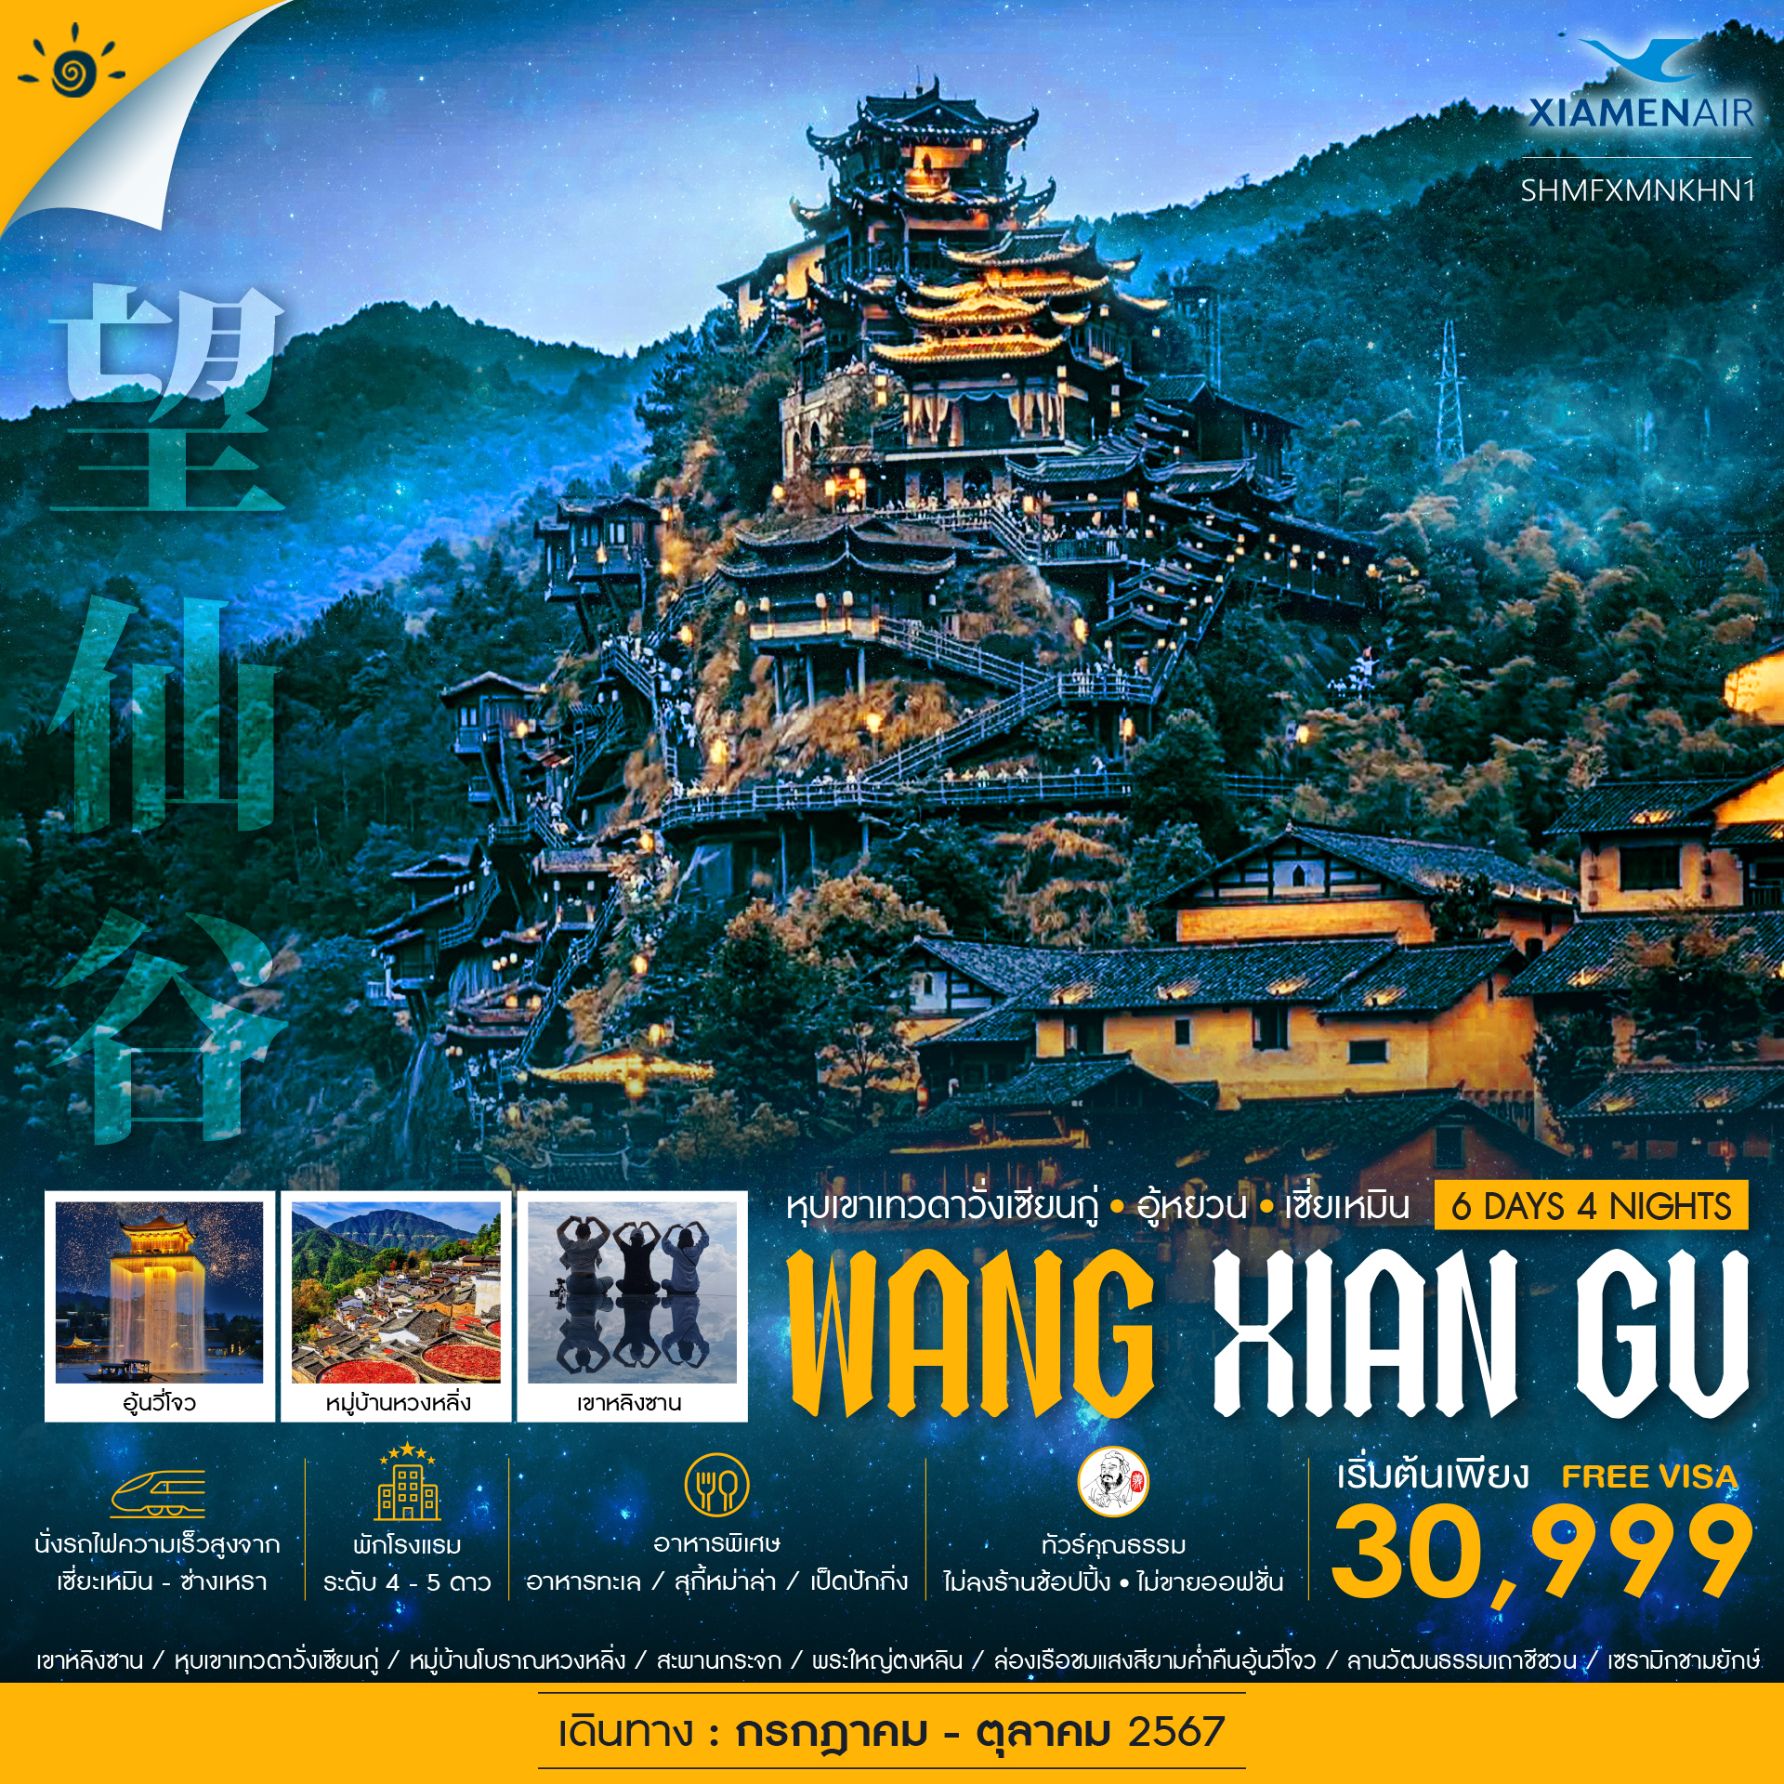 WANG XIAN GU หุบเขาเทวดาวั่งเซียนกู่ อู้หยวน เซี่ยเหมิน 6 วัน 4 คืน เดินทาง กรกฏาคม - ตุลาคม 67 เริ่มต้น 30,999.- Xiamen Airlines (MF)